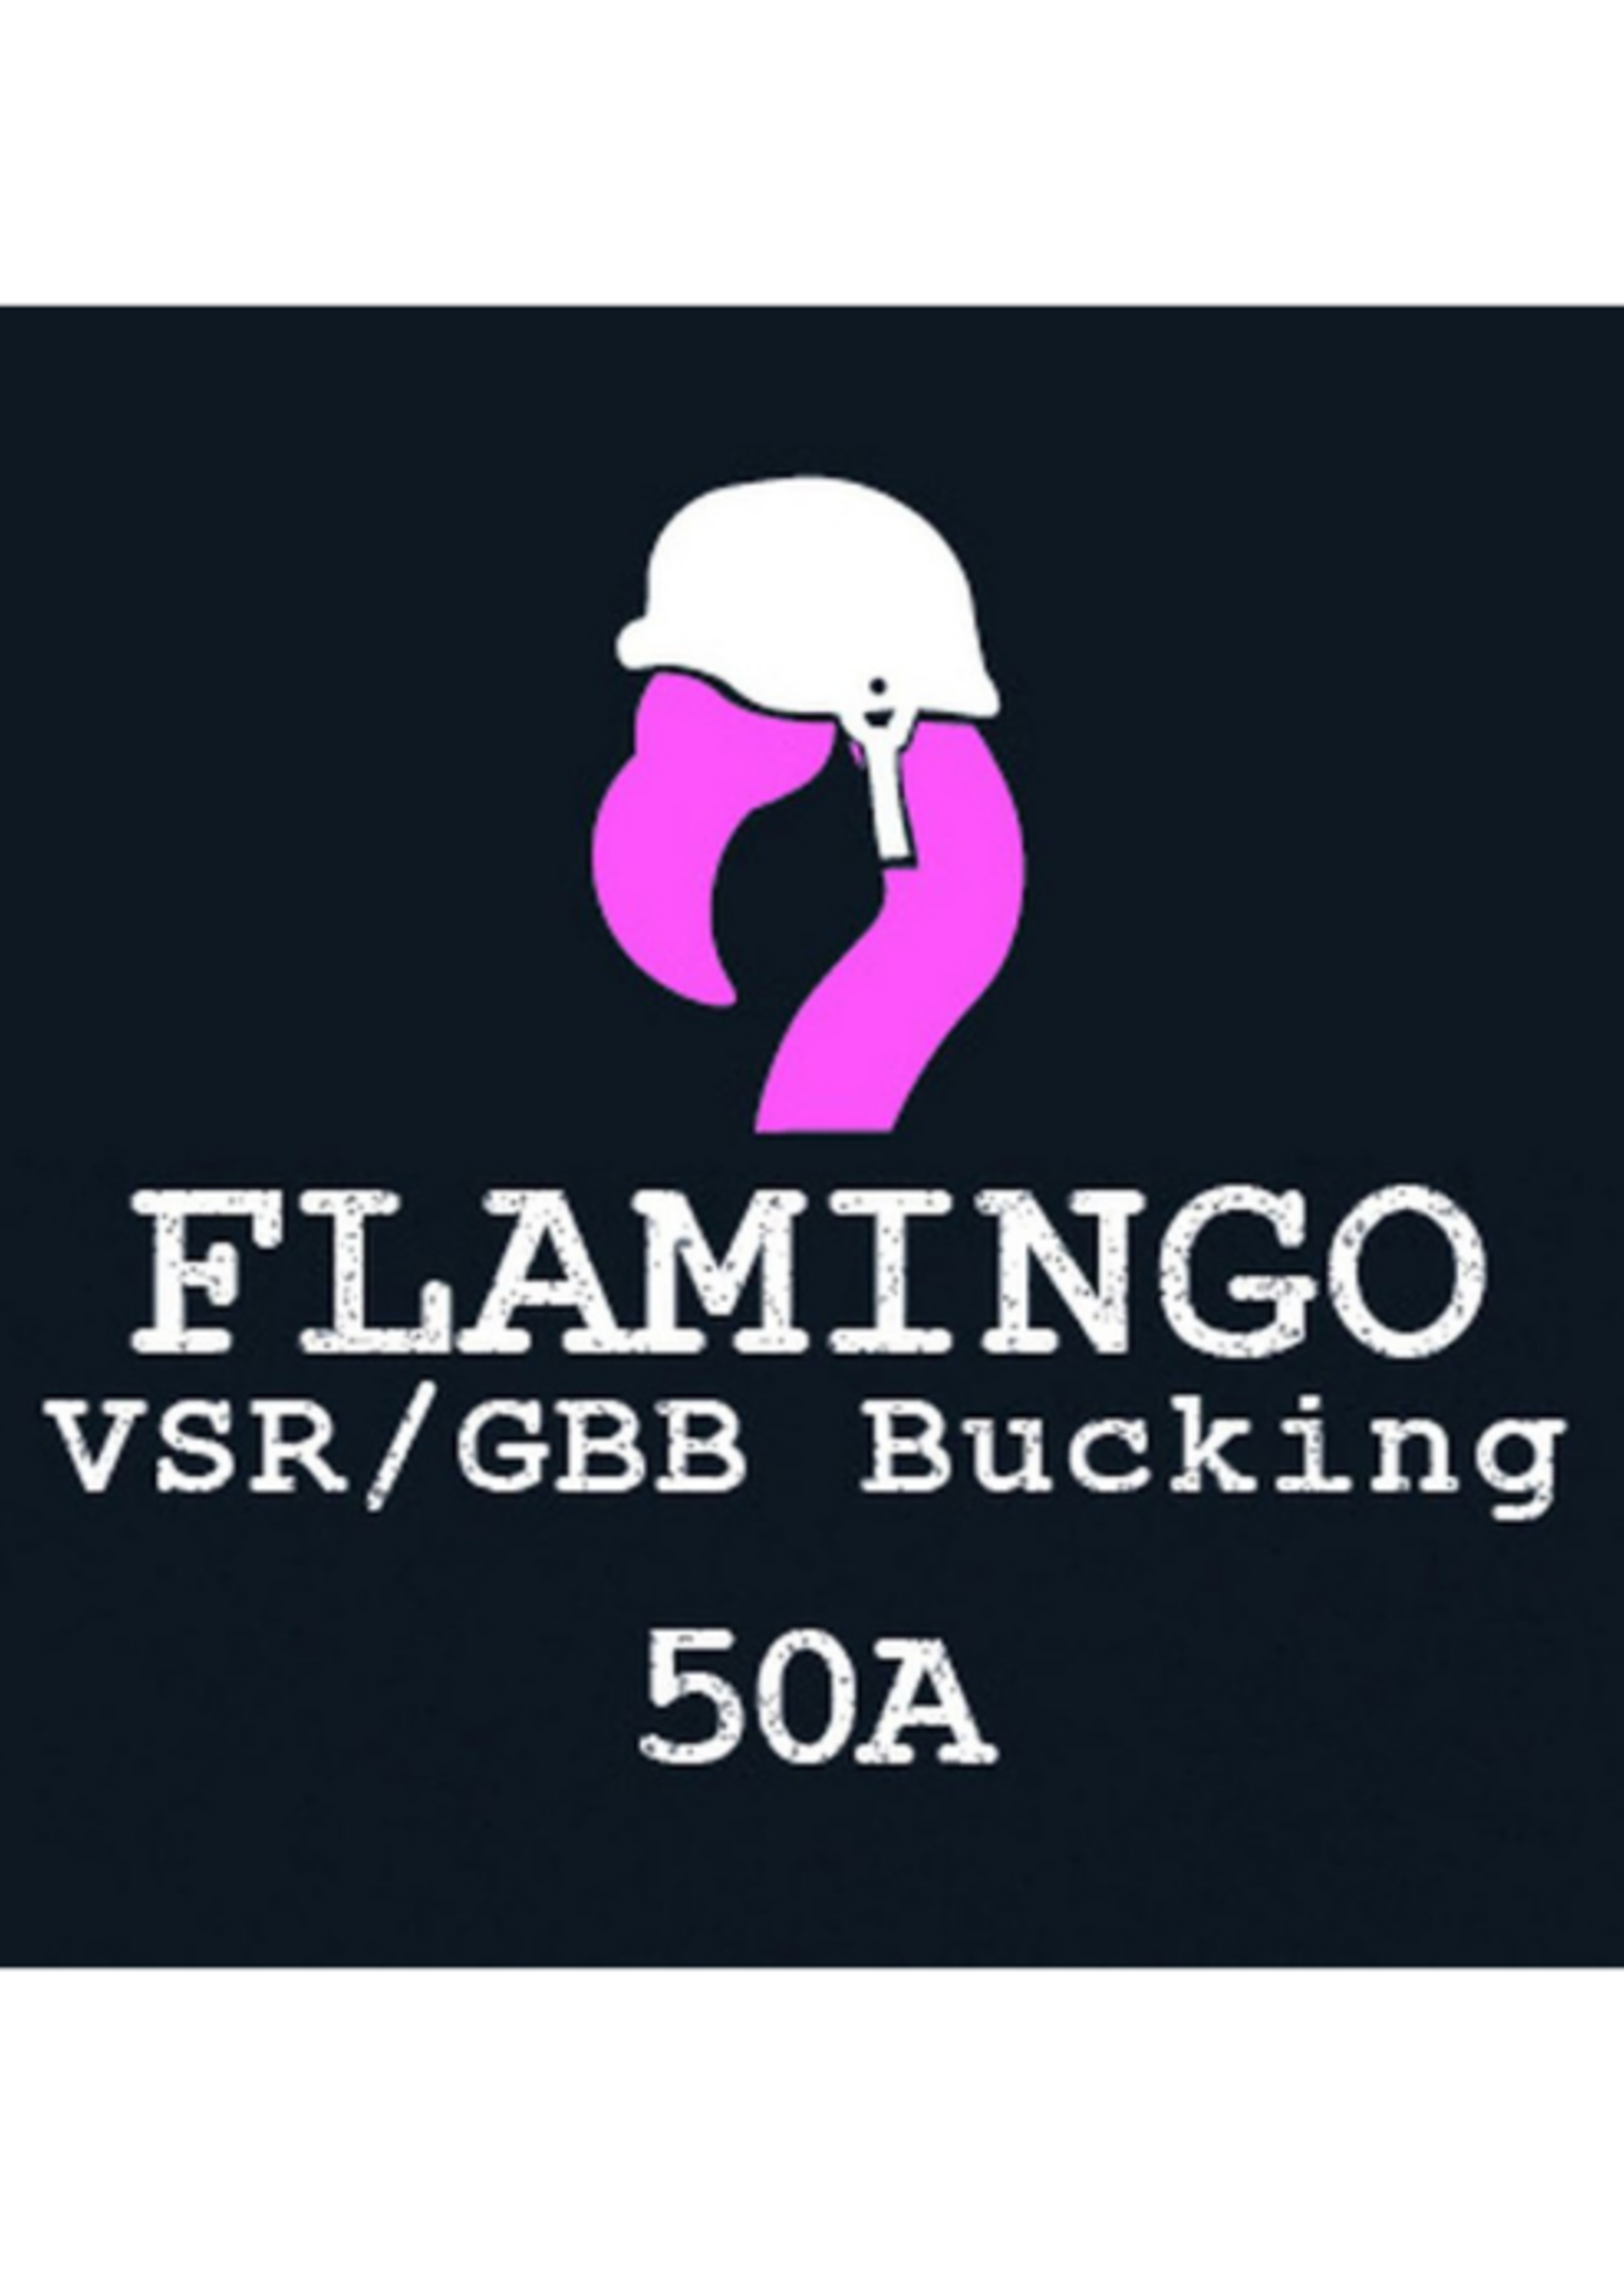 VSR/GBB Flamingo Bucking 50 Degree - 2021 version